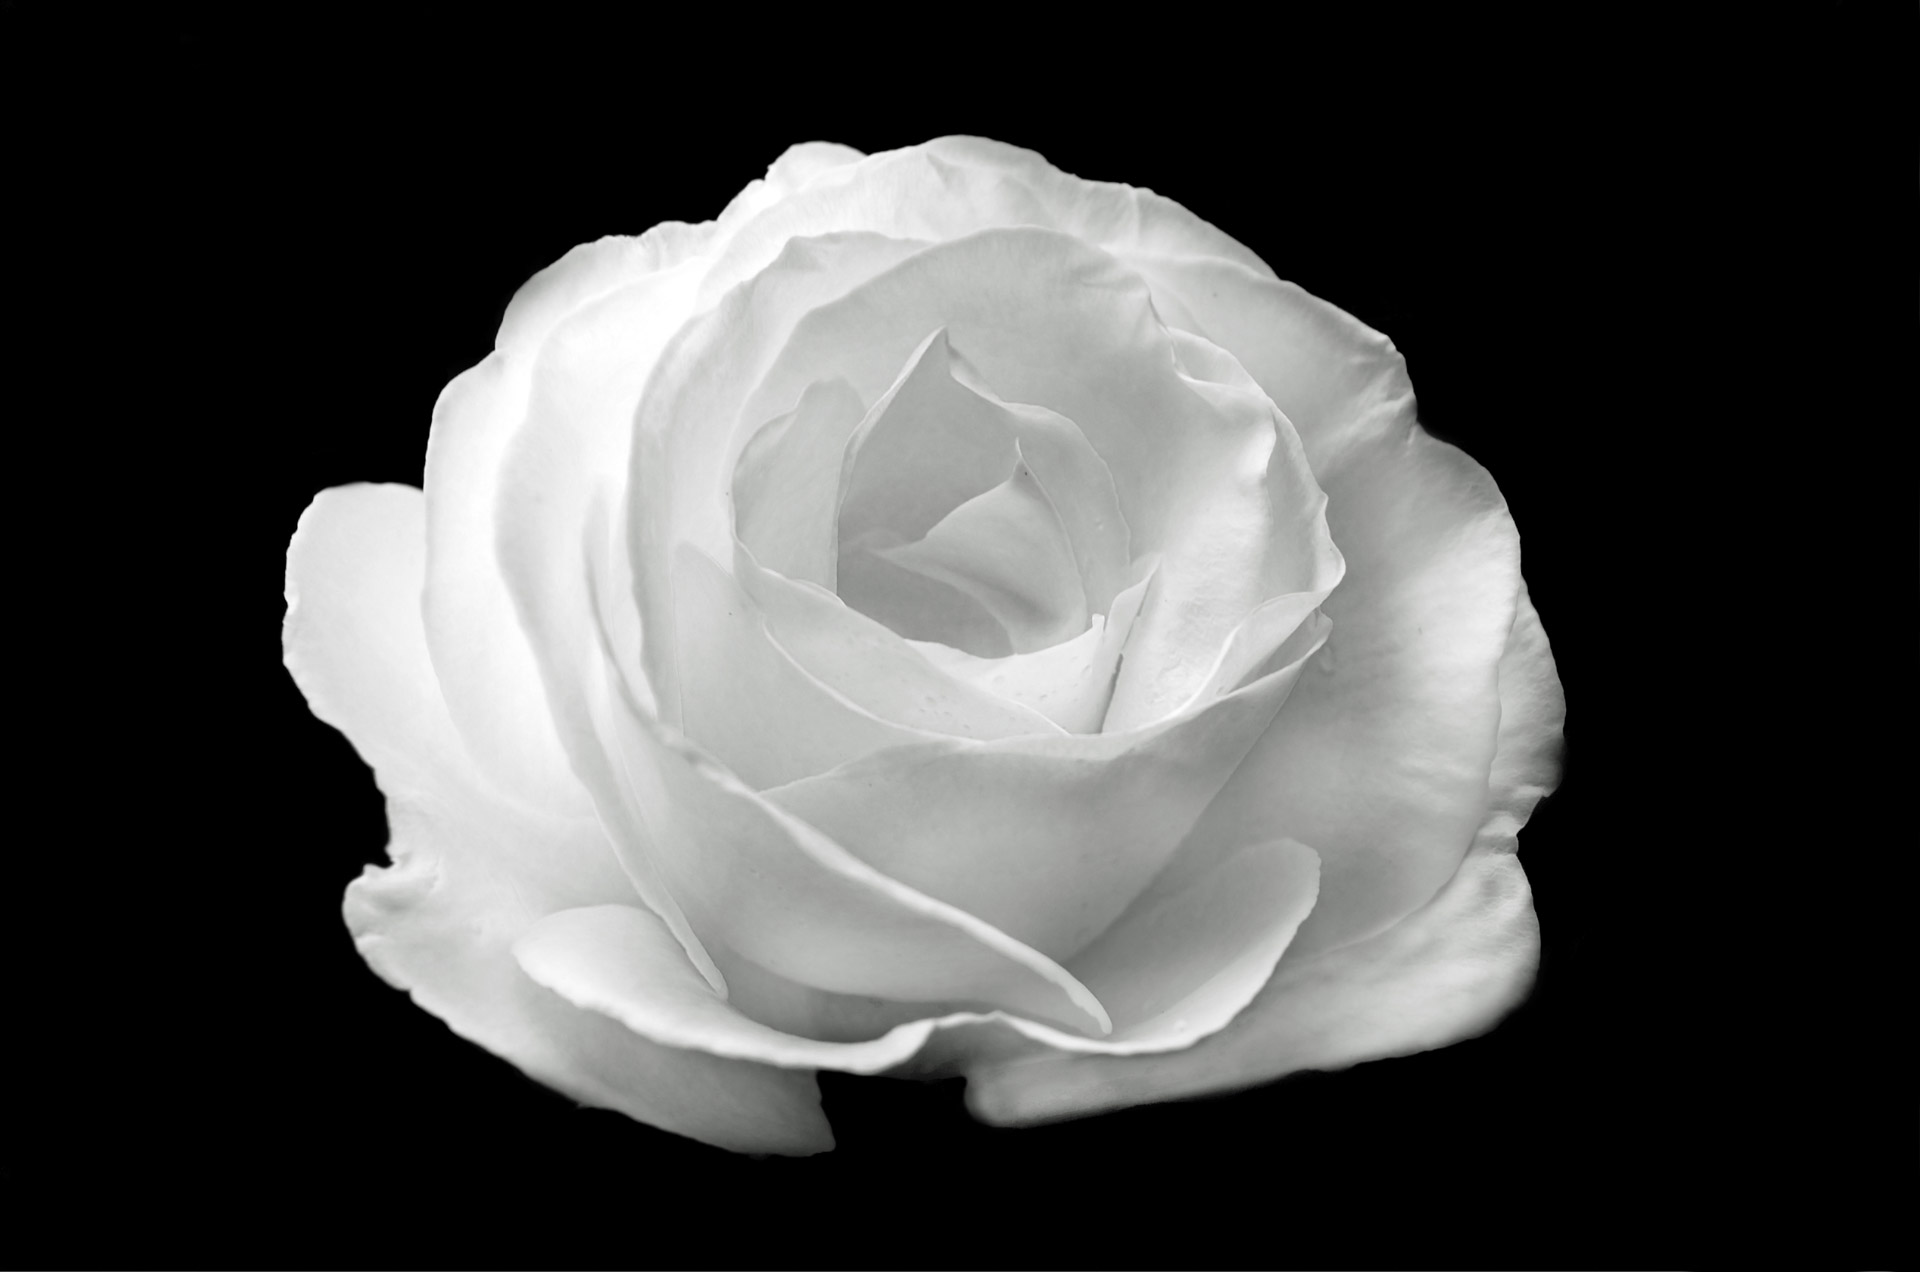 White Rose On The Black Background Free Stock Photo - Public Domain